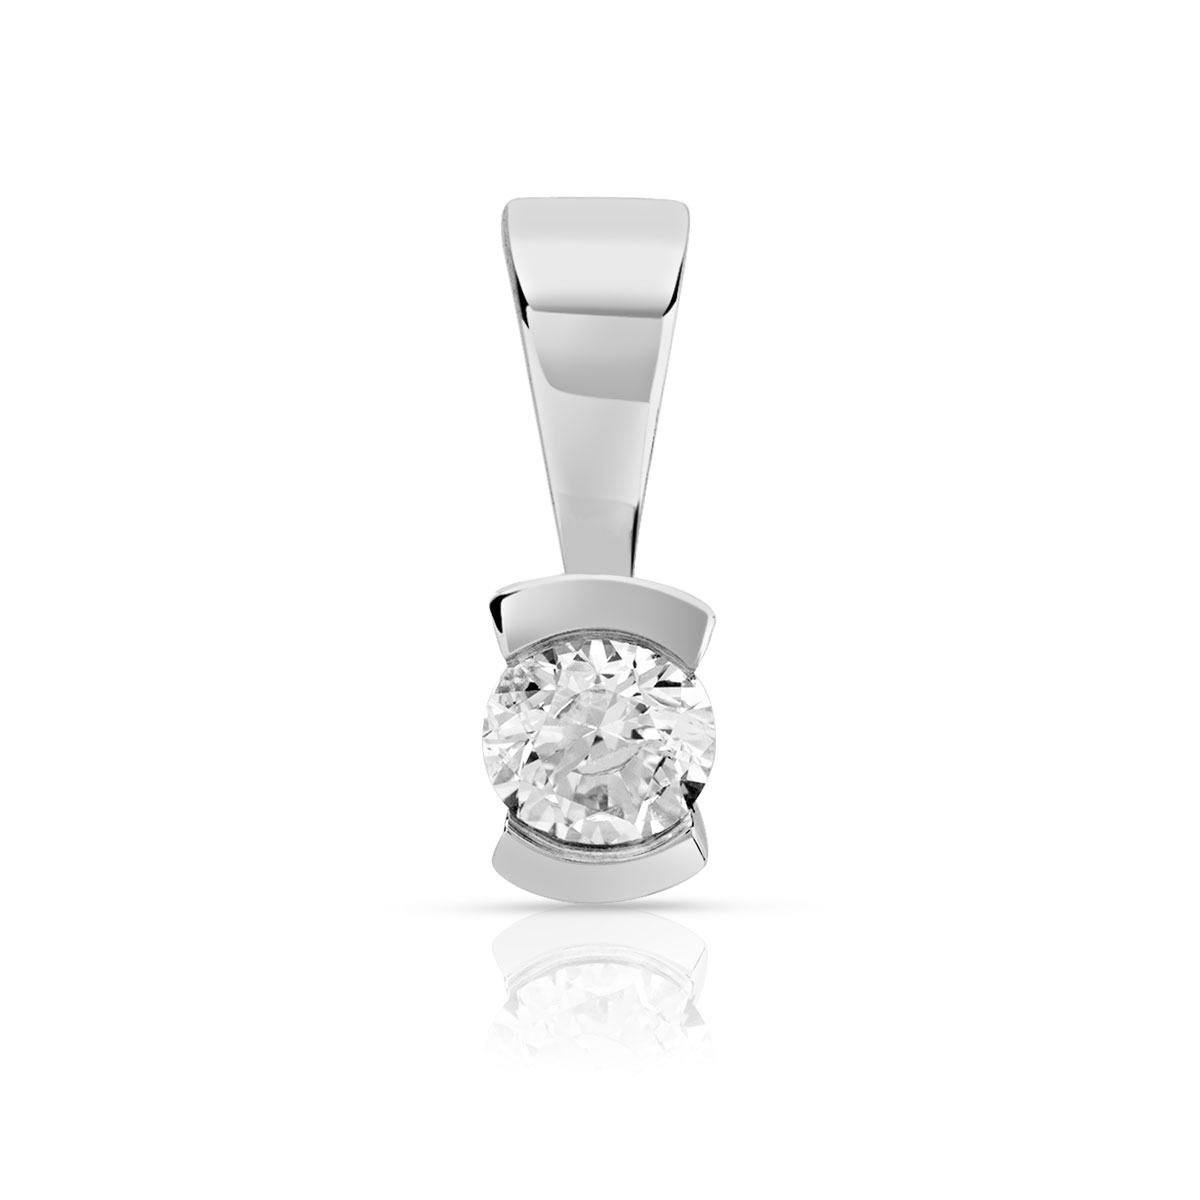 Pendentif or blanc 750 diamant synthétique 0.10 carat